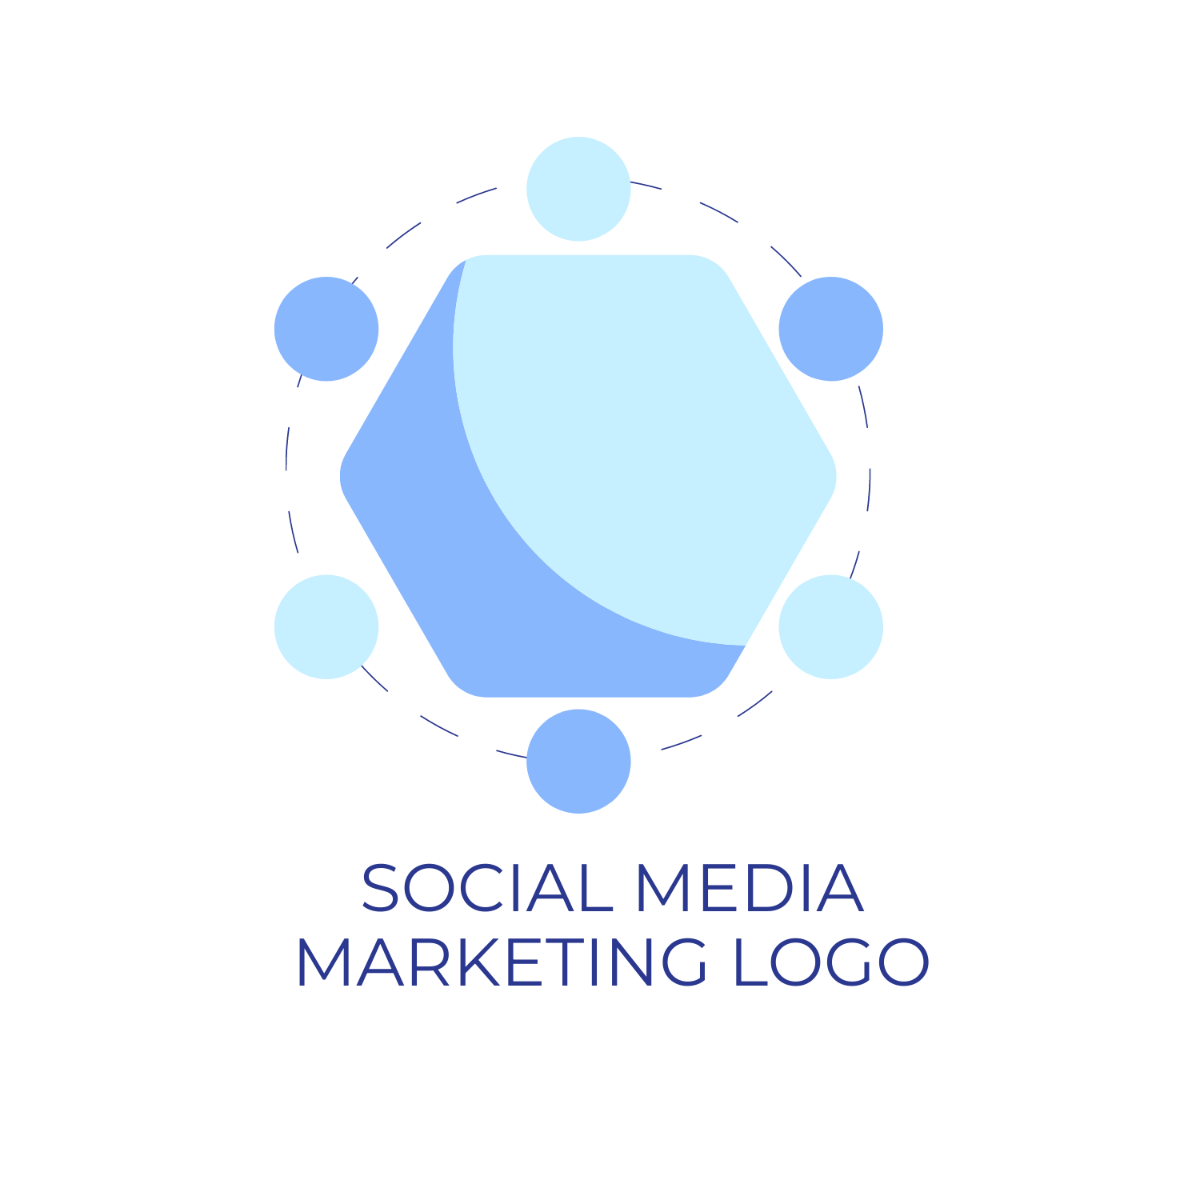 Free Social Media Marketing Logo Template